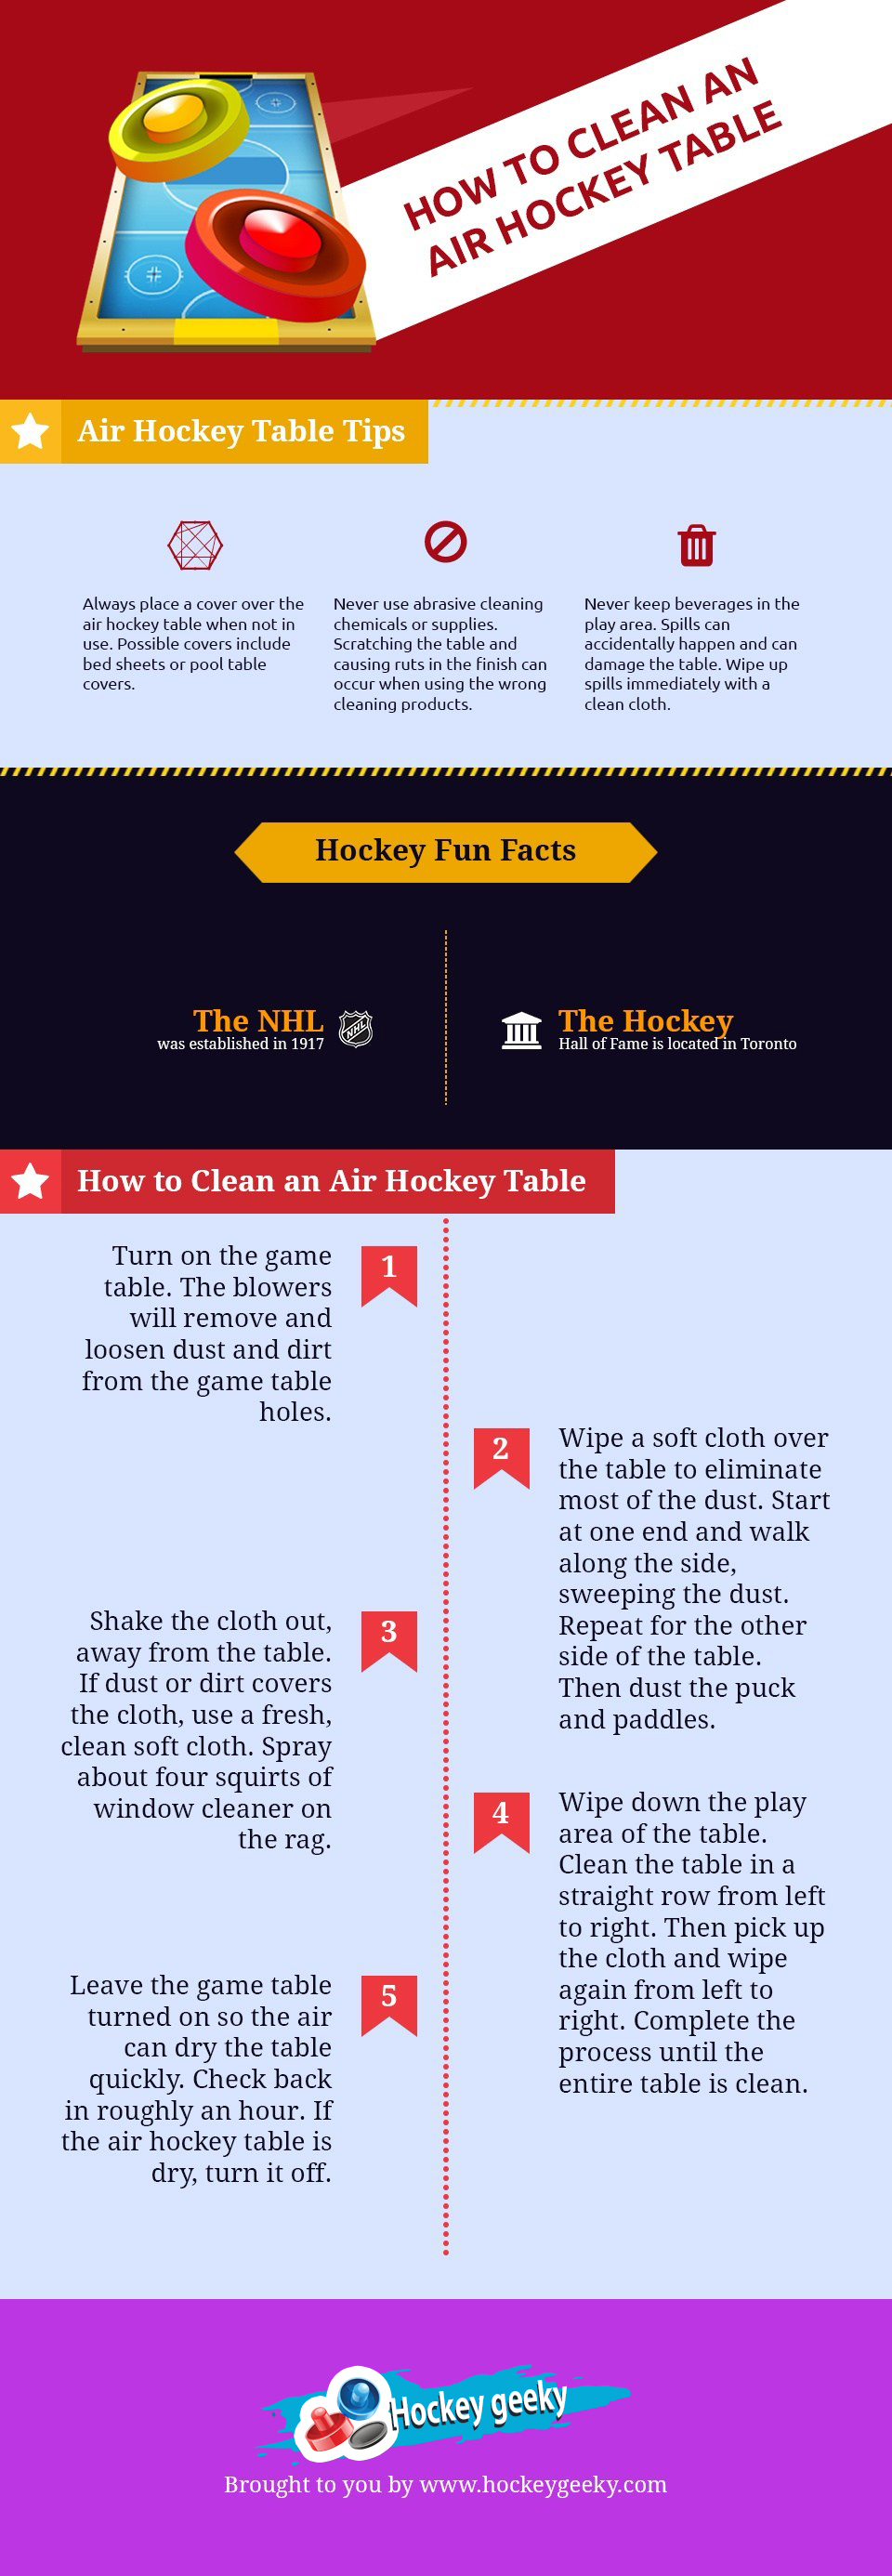 How to Clean an Air Hockey Table